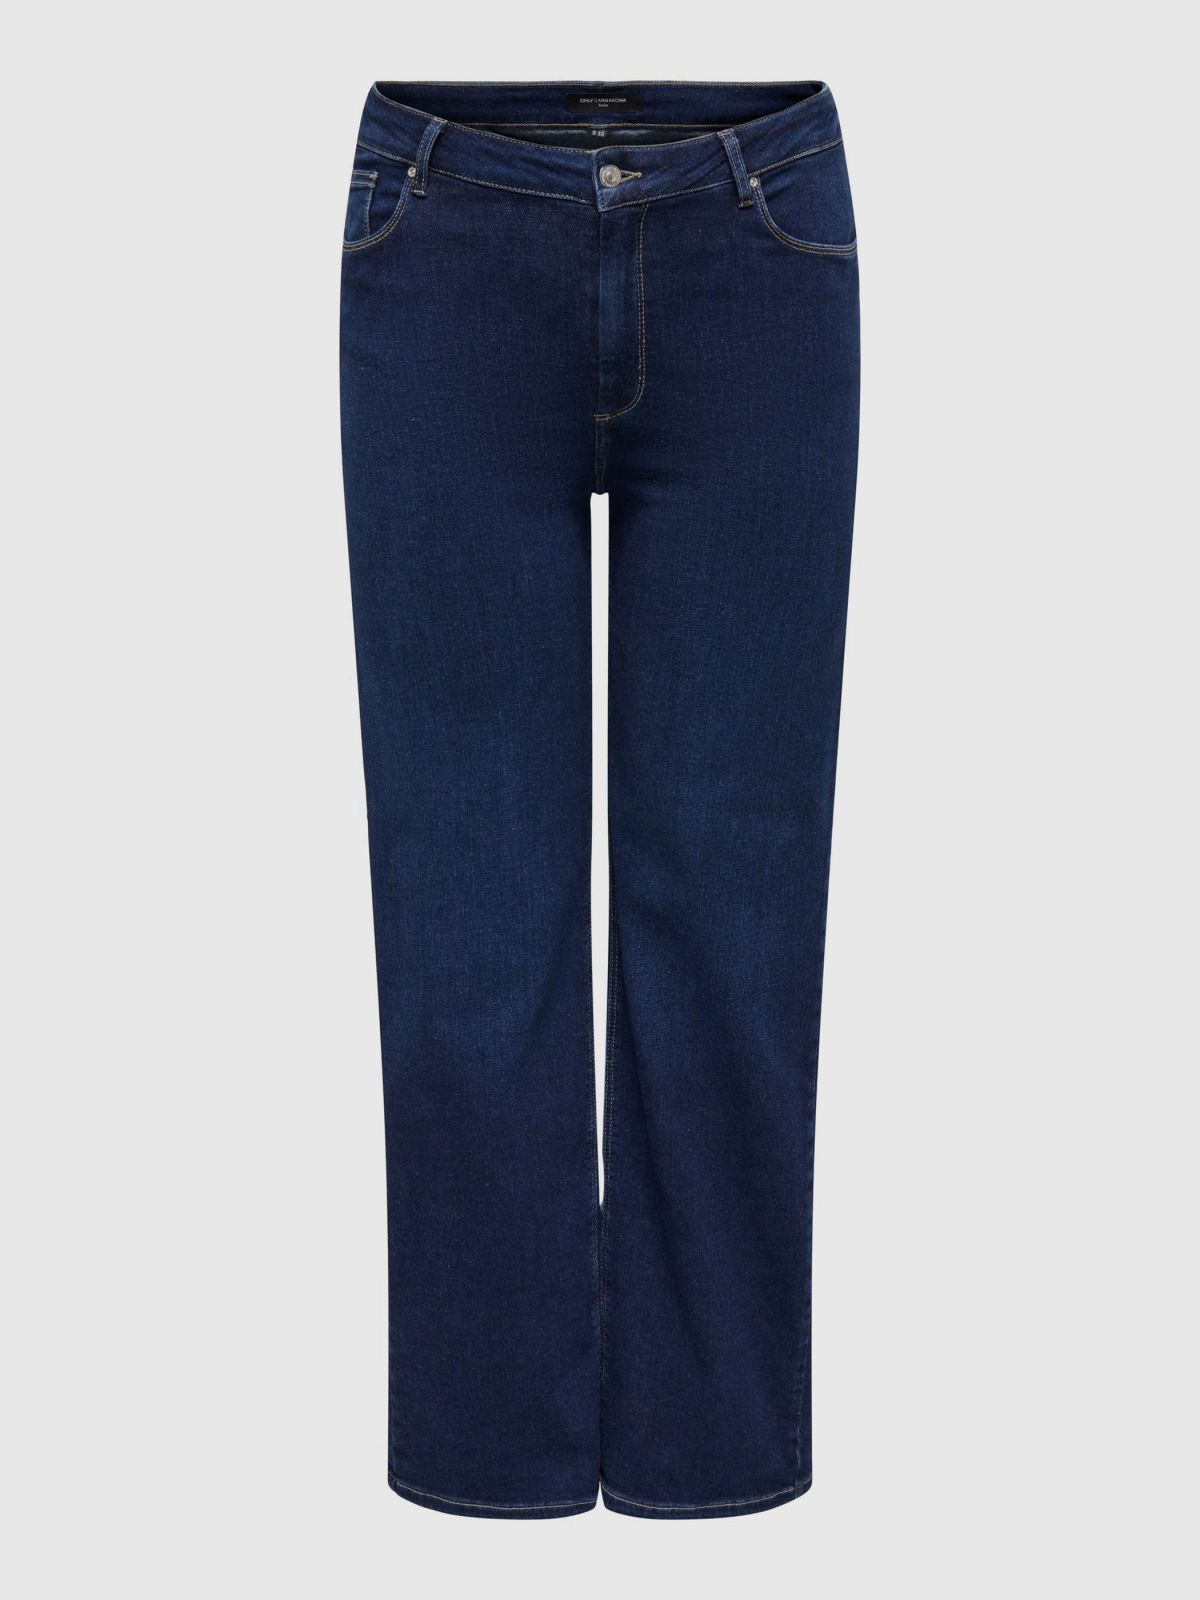  מכנסי ג'ינס בגזרה רחבה / נשים של ONLY